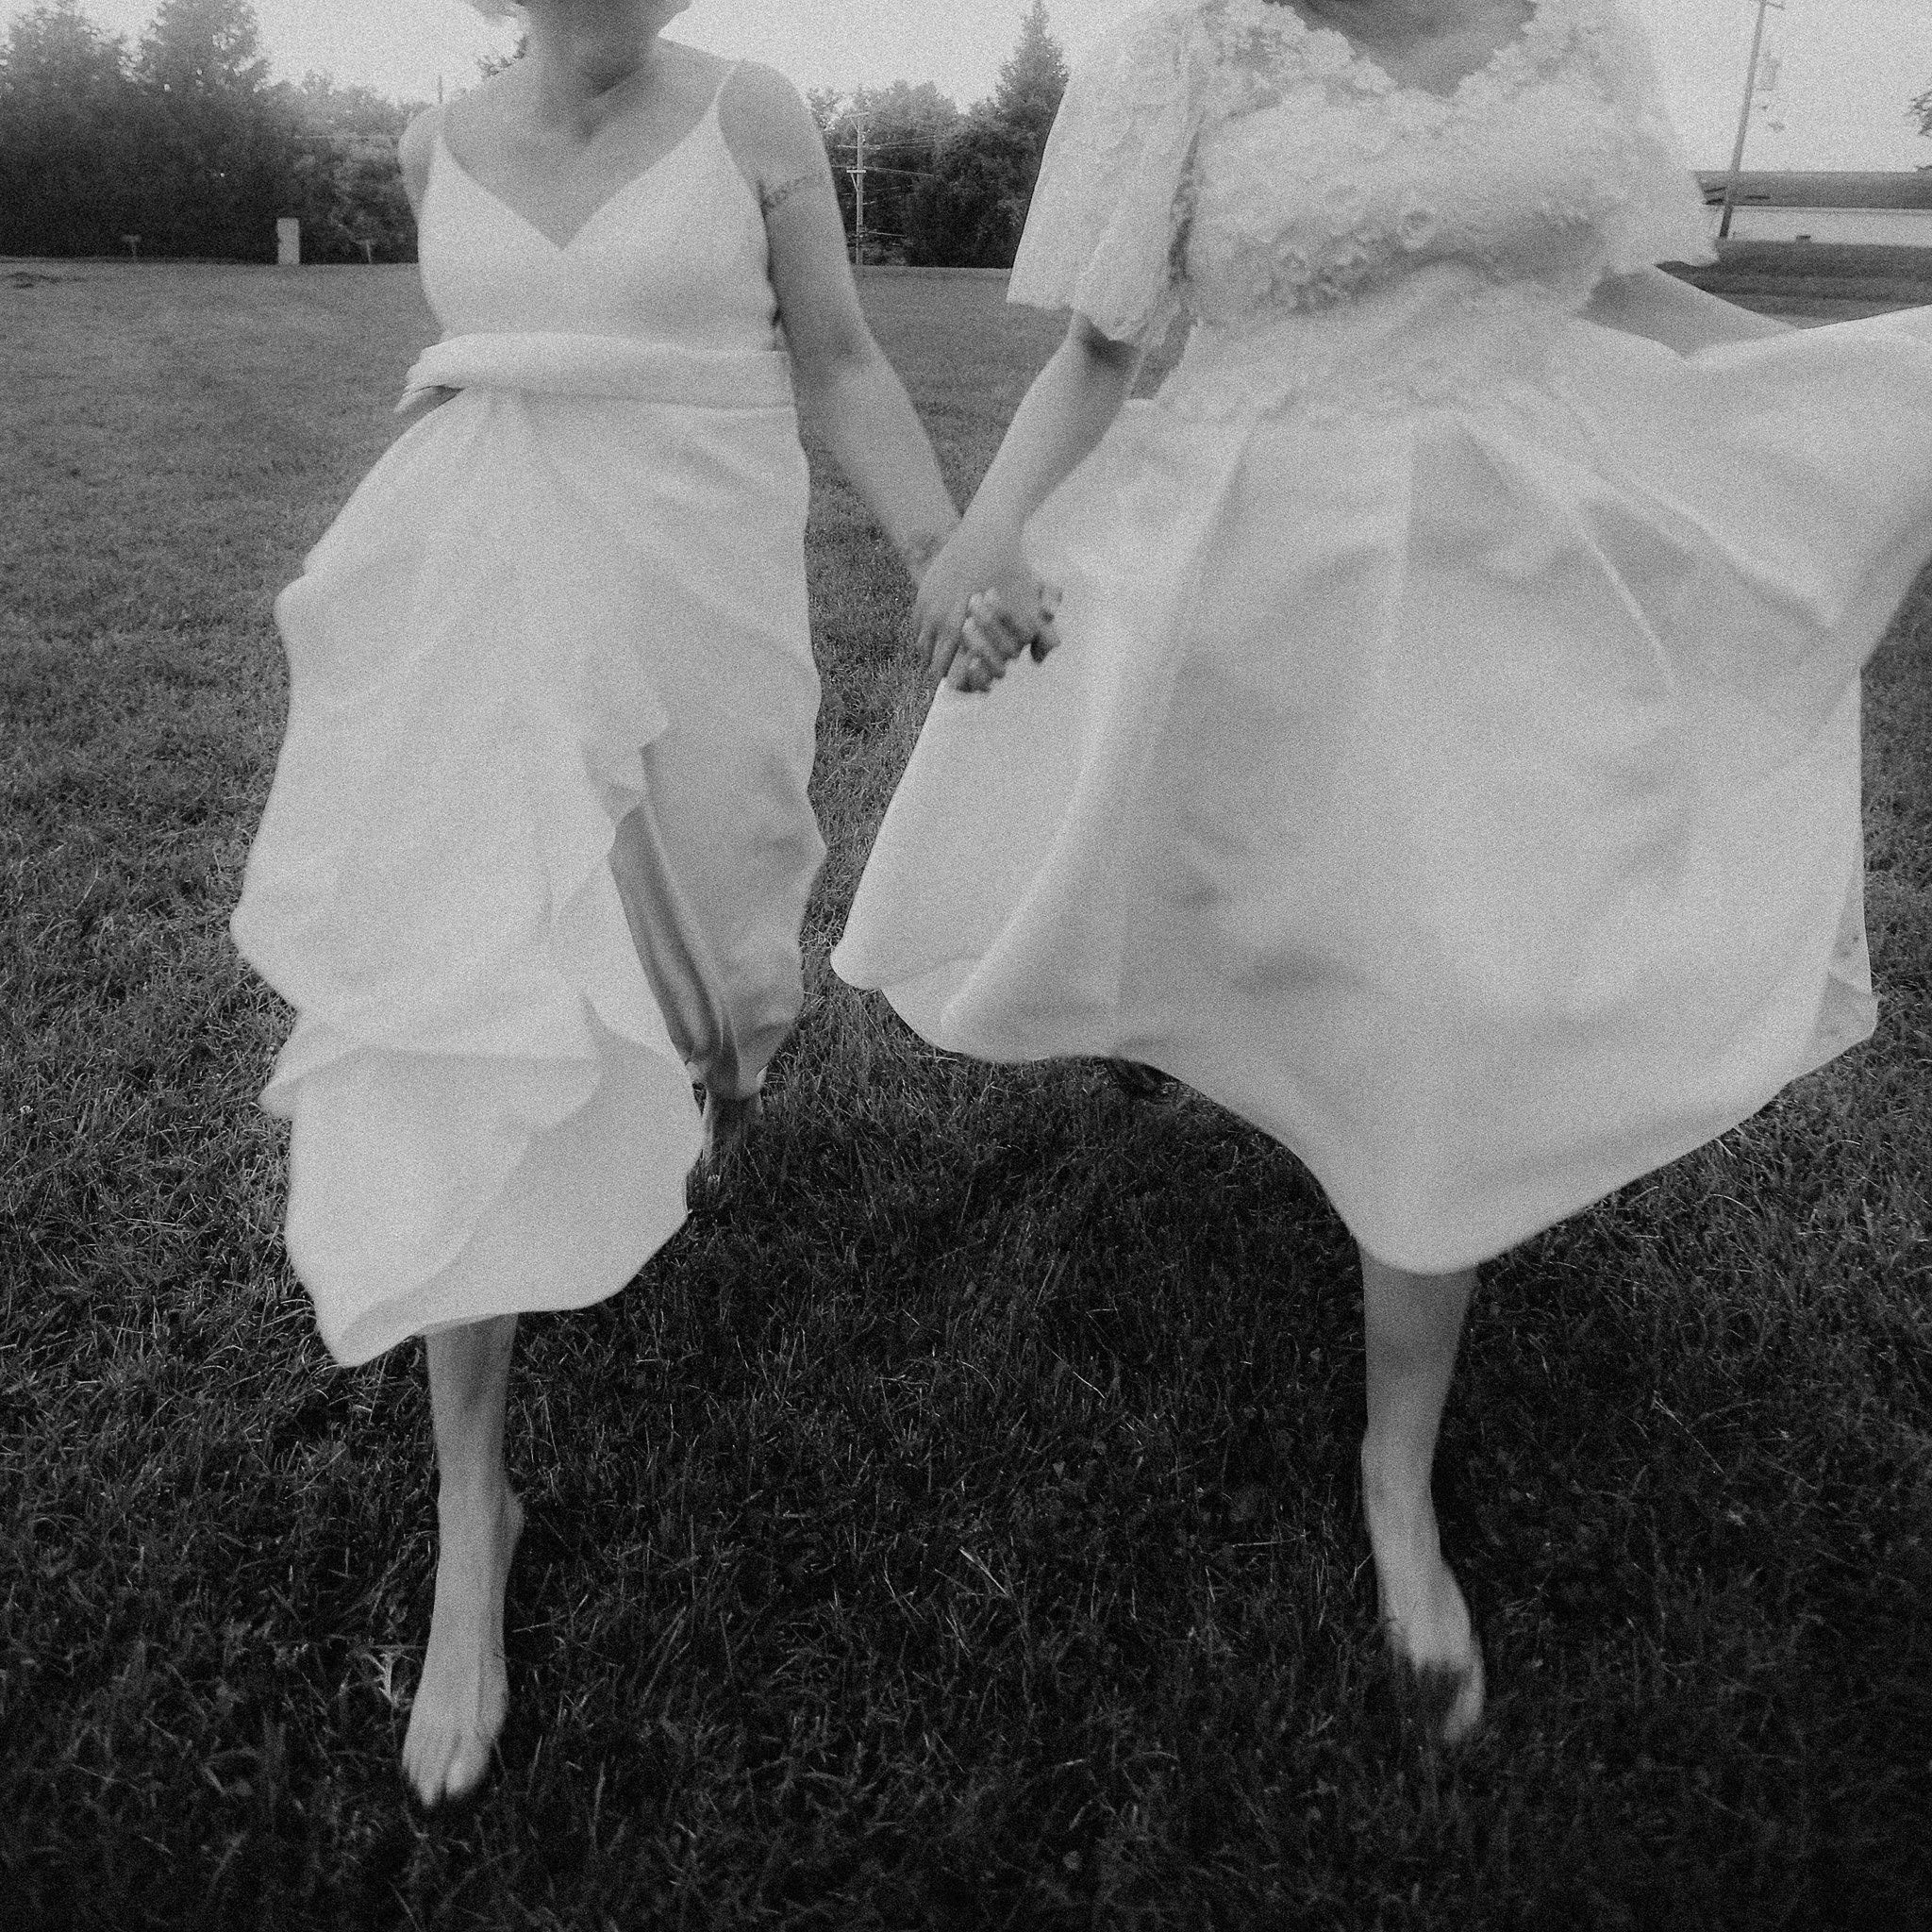 Winters-Photography-Co-Elizabeth Crum Bridal-Inclusive-Kentucky-Weddings-LGBTQ00010.JPG